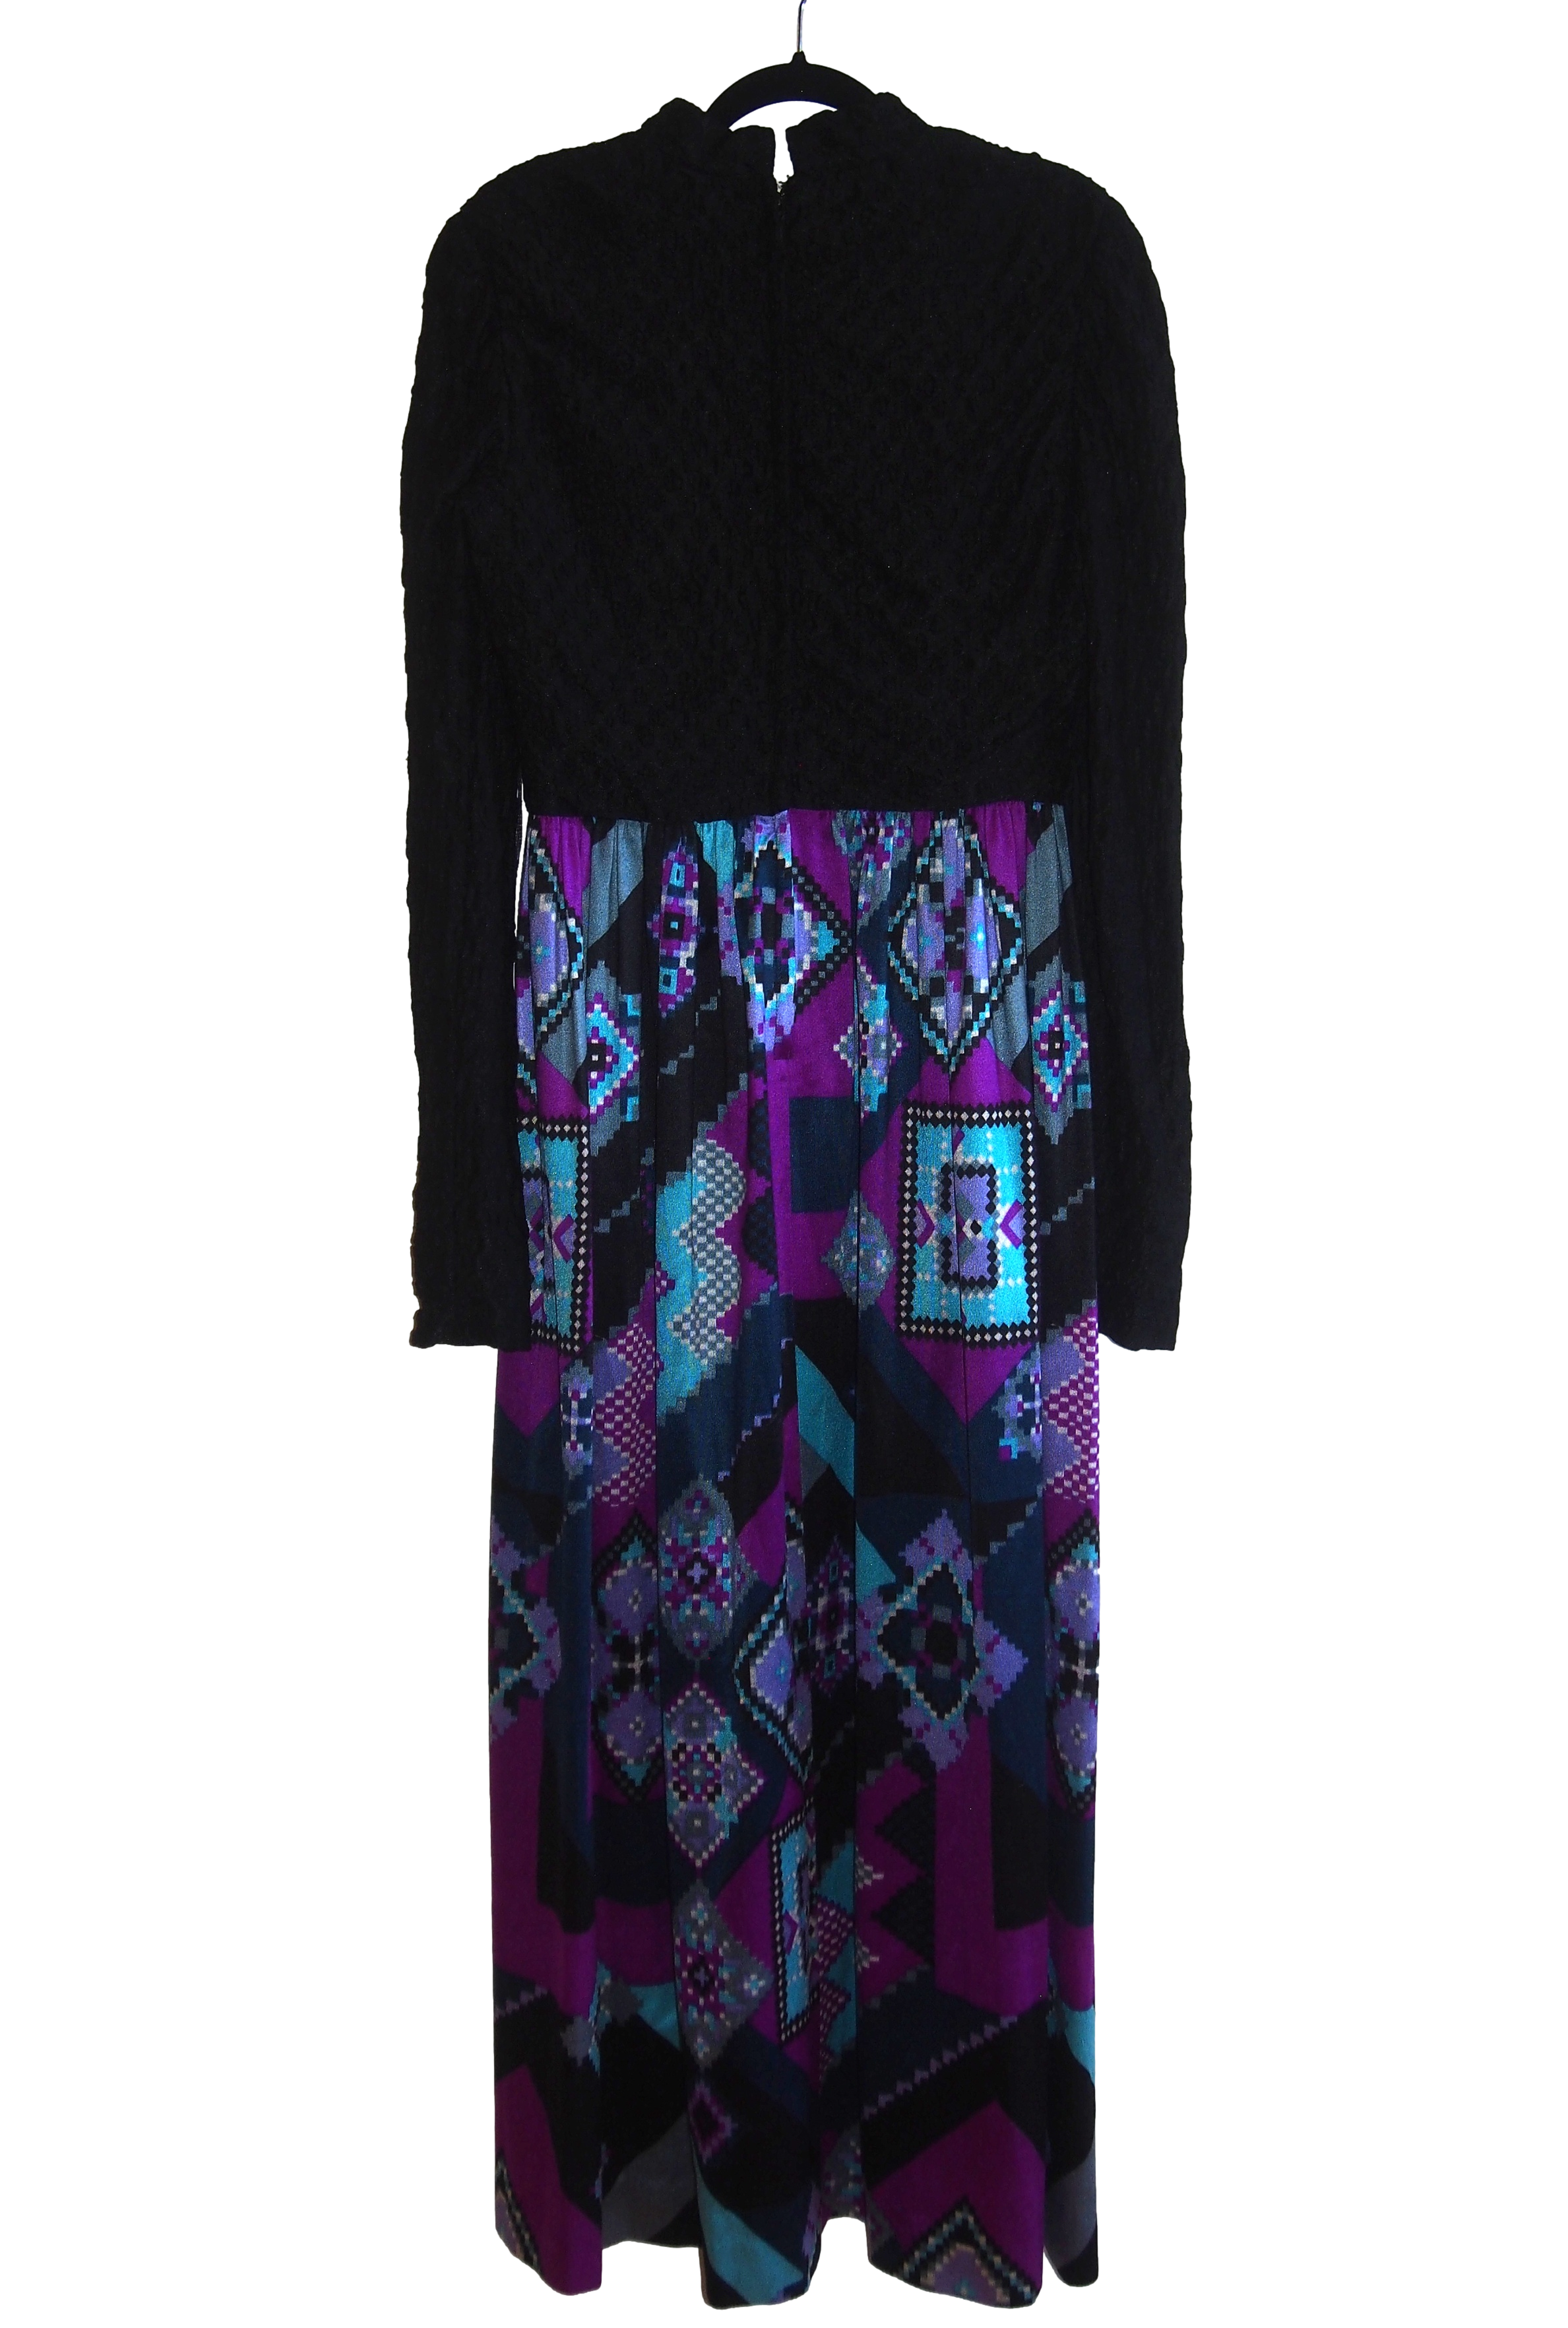 Black Lace and Purple Geometric Maxi Dress